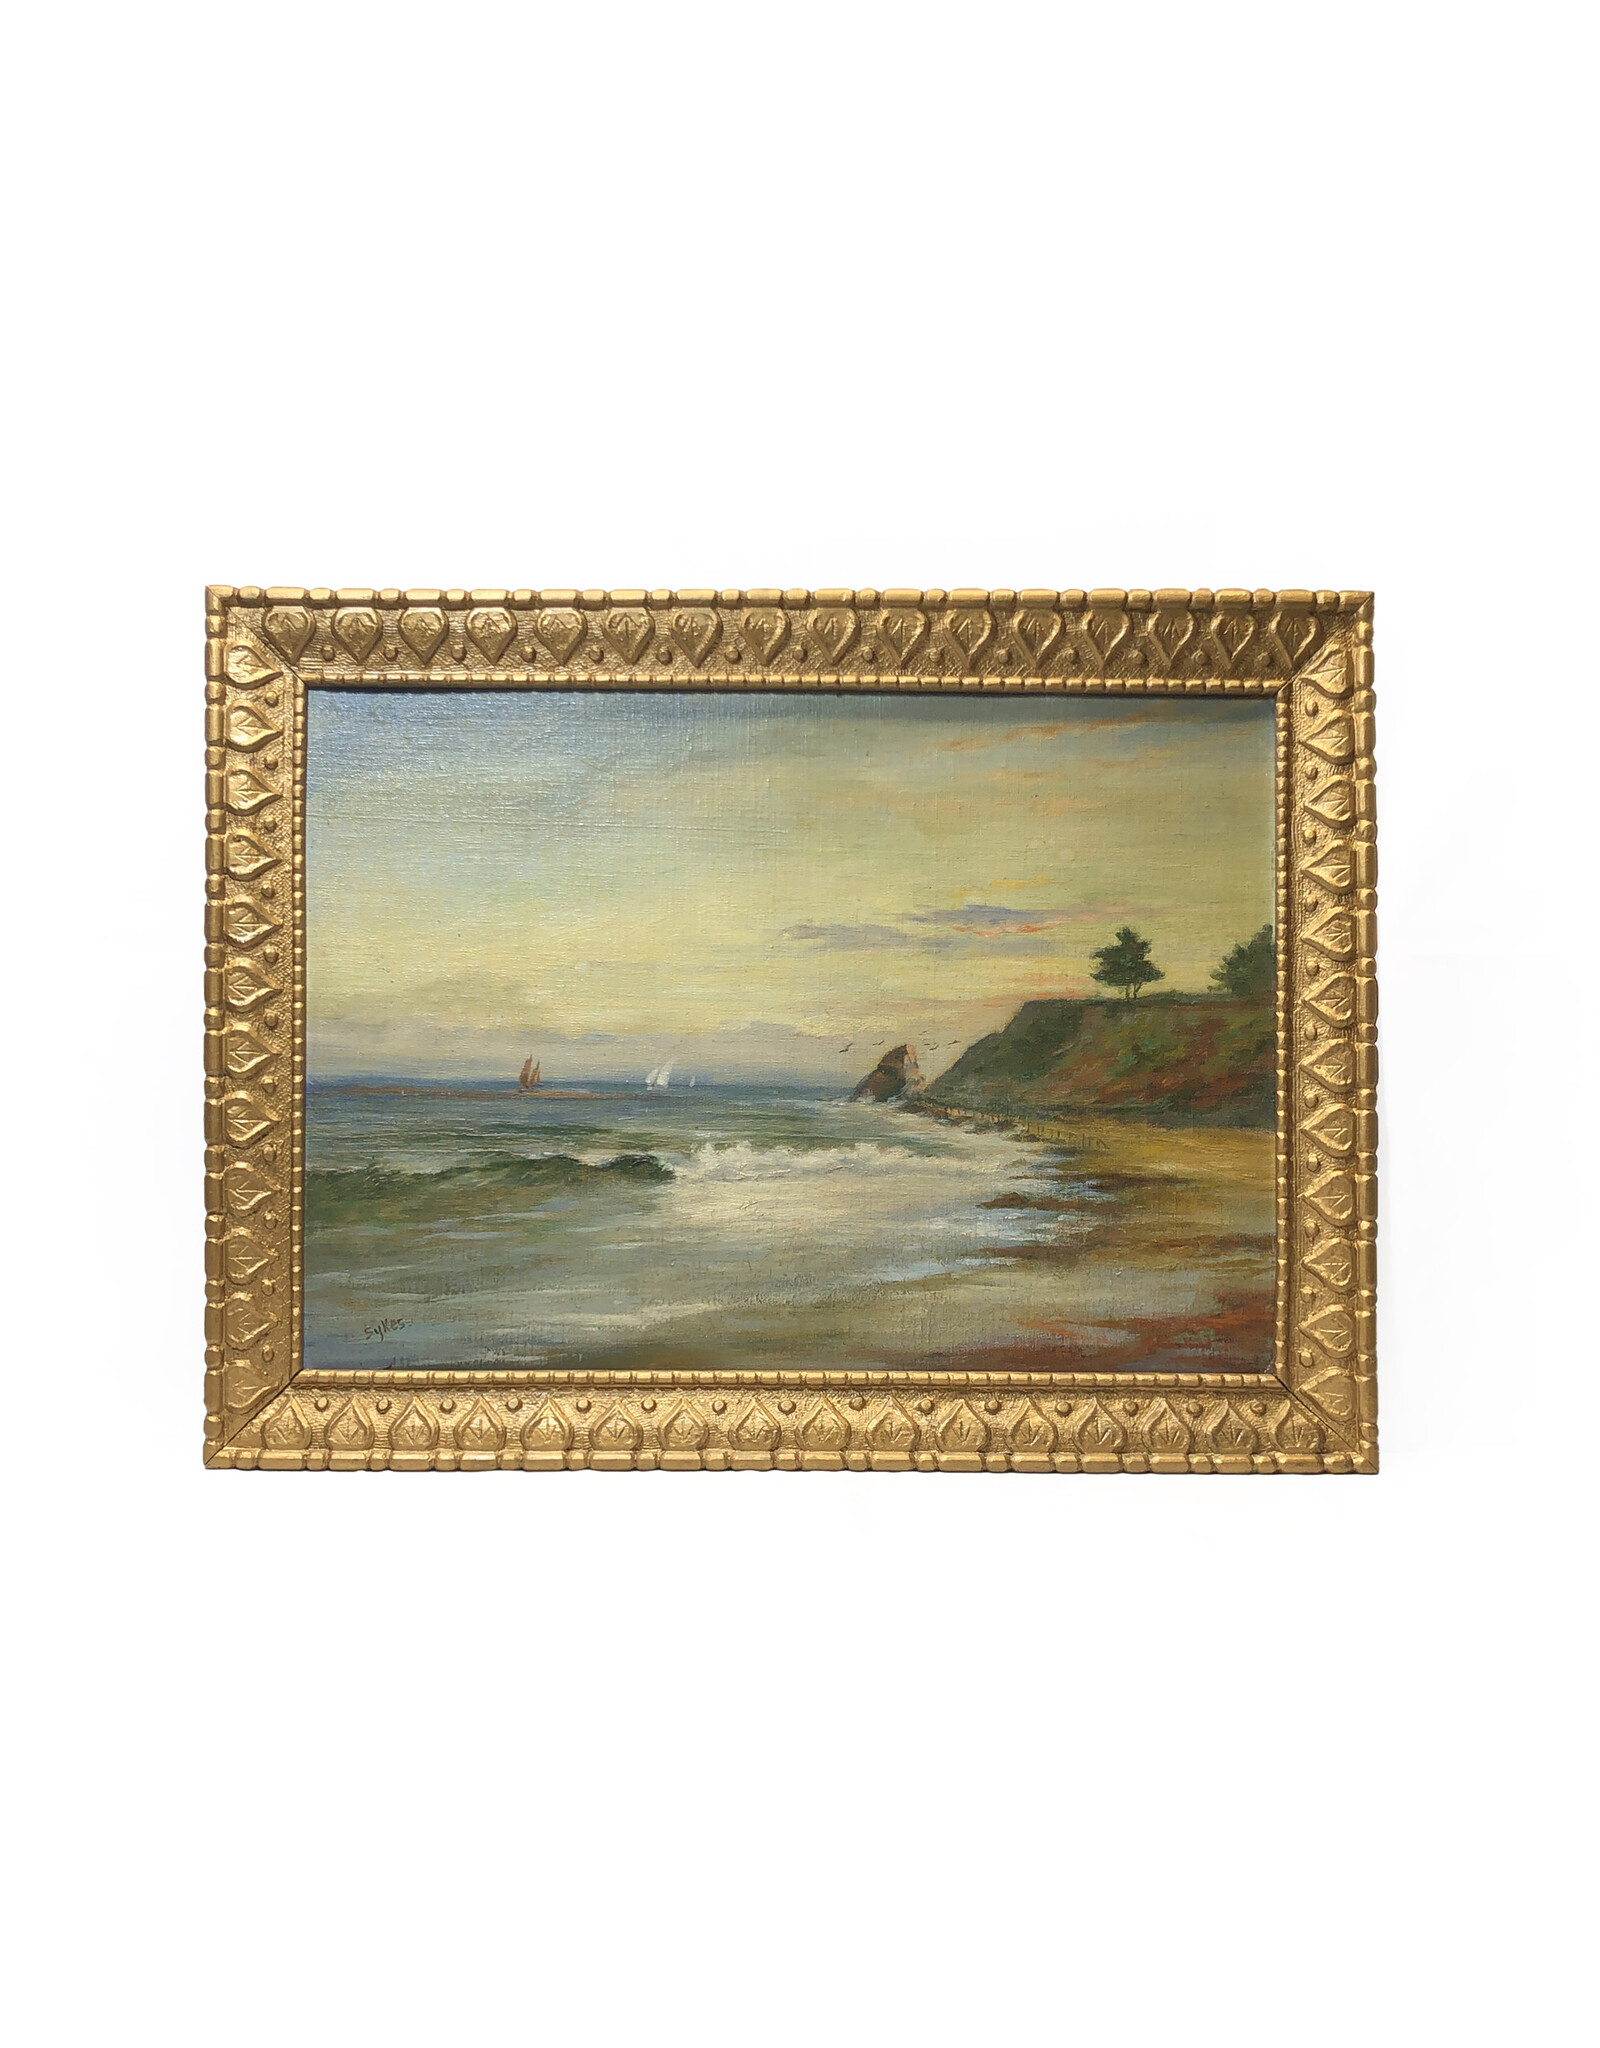 John Sykes Castle Rock at Ledbetter Beach Santa Barbara, California Oil Painting on Canvas Turn of the Century